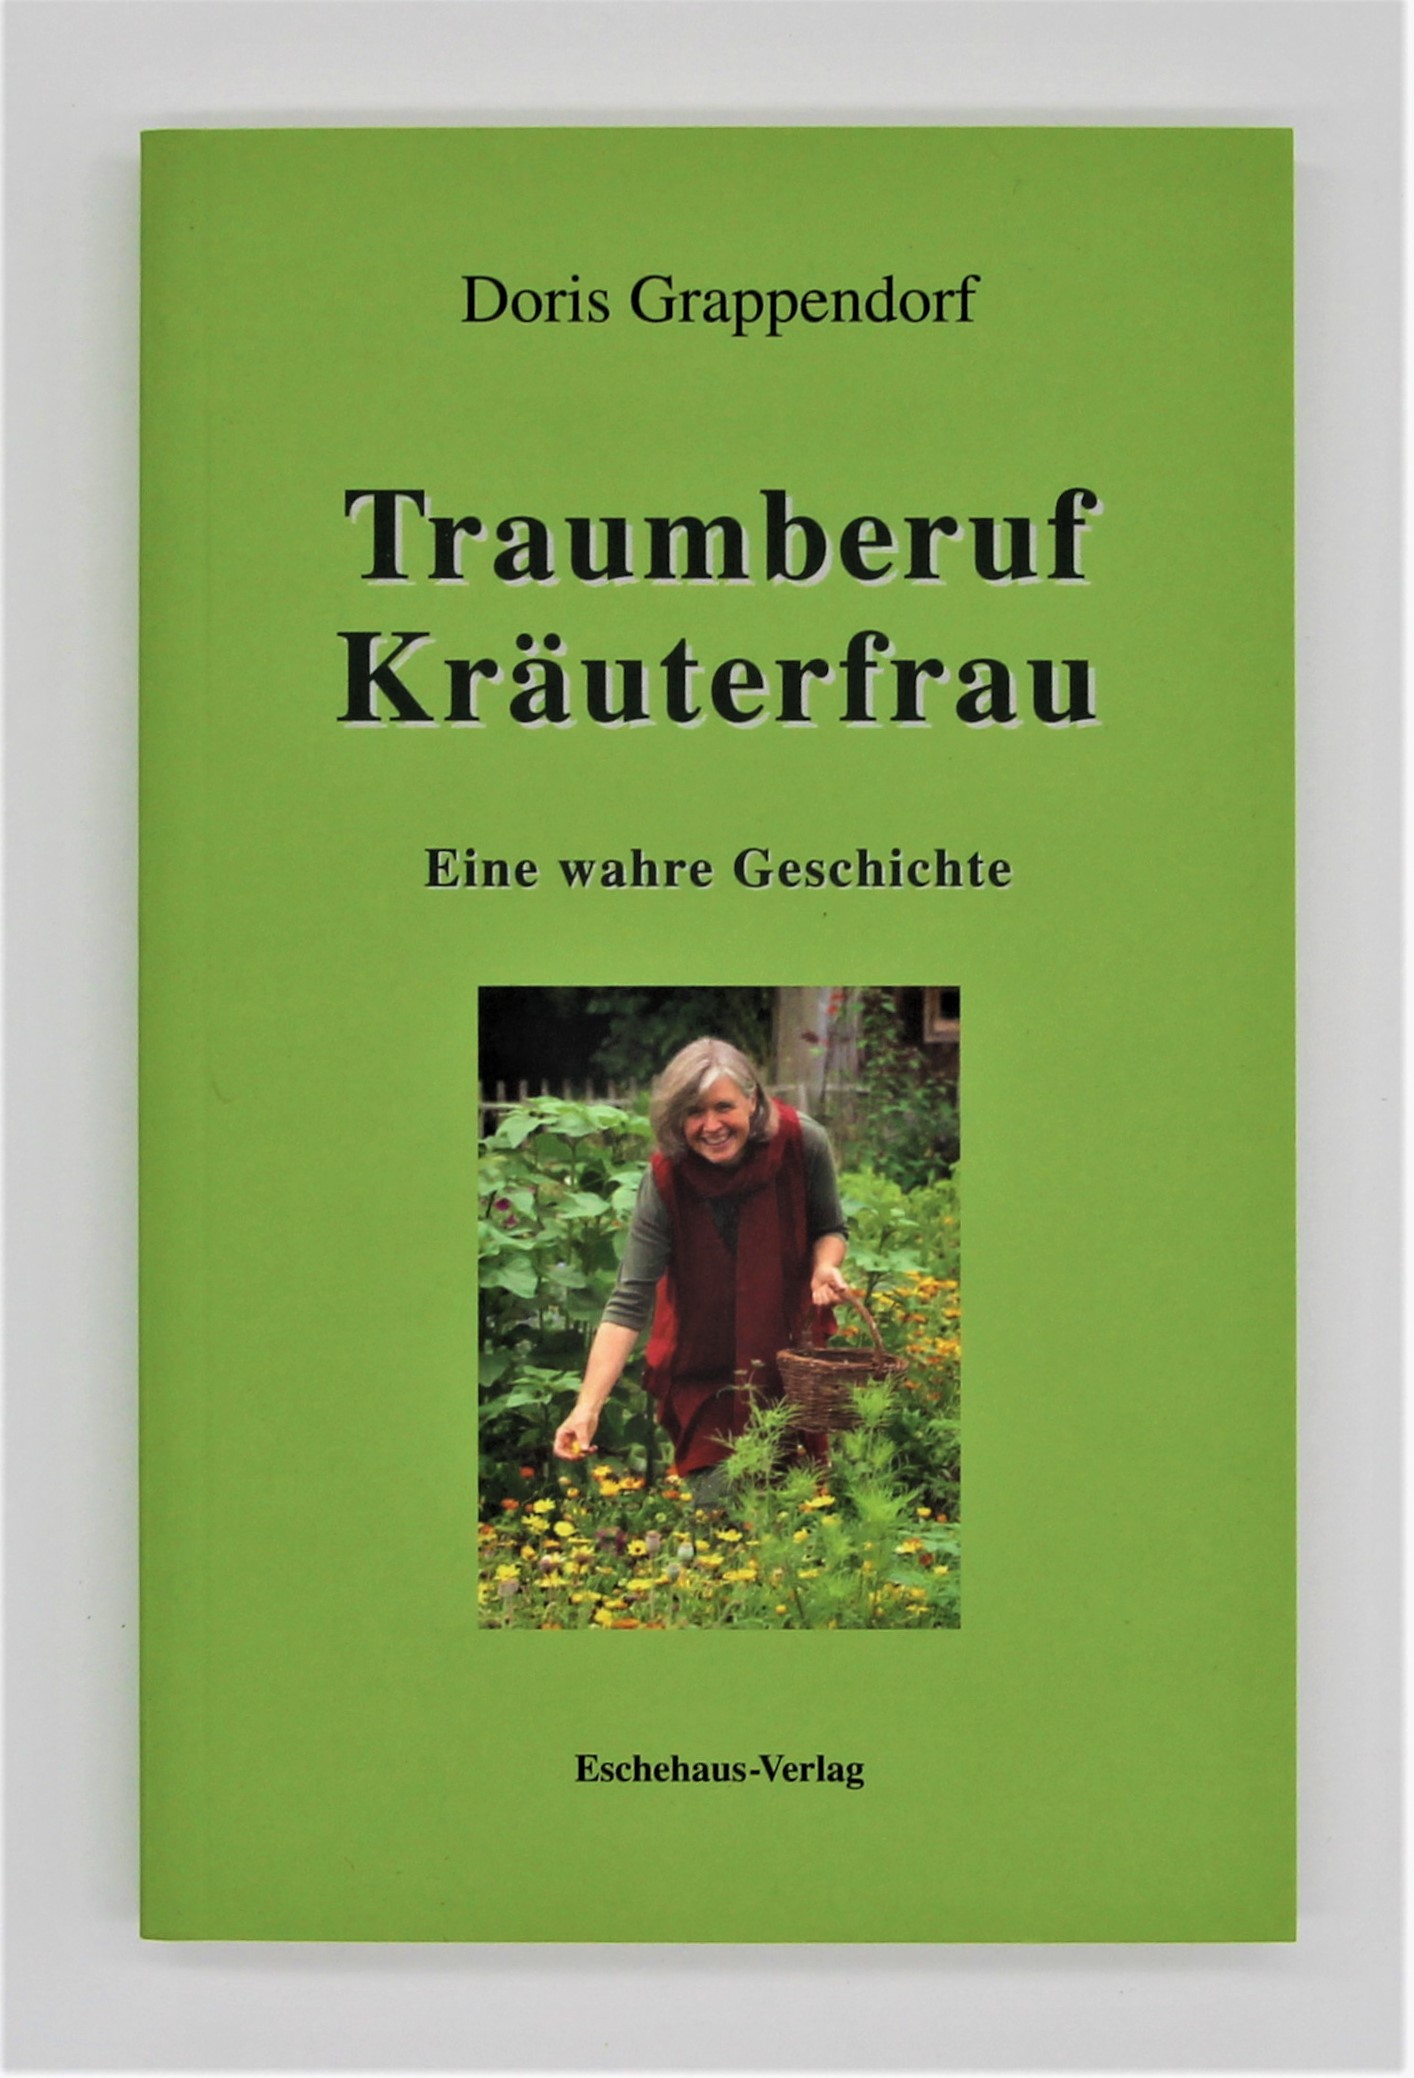 Traumberuf Kräuterfrau Band 1, Doris Grappendorf